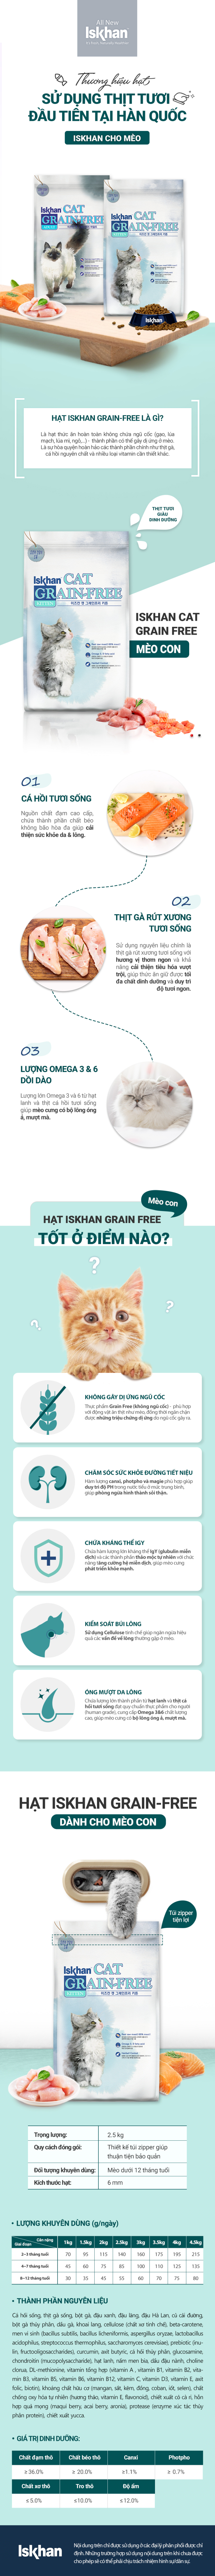 iskhan-cat-kitten-redesign-1720507582.jpg